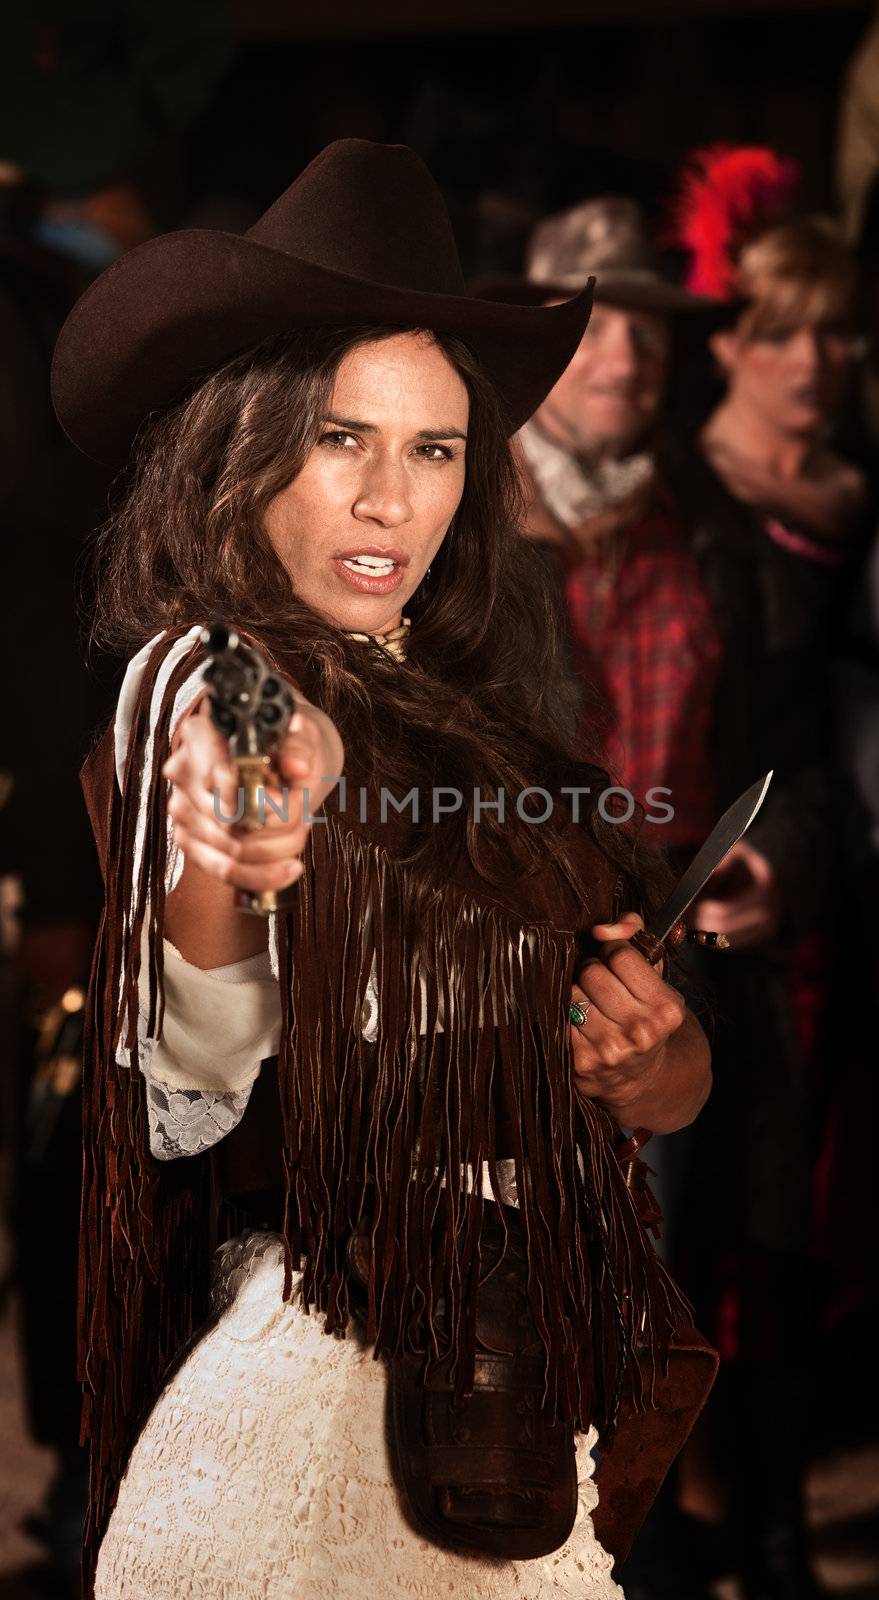 Female Native American gun fighter with revolver and dagger